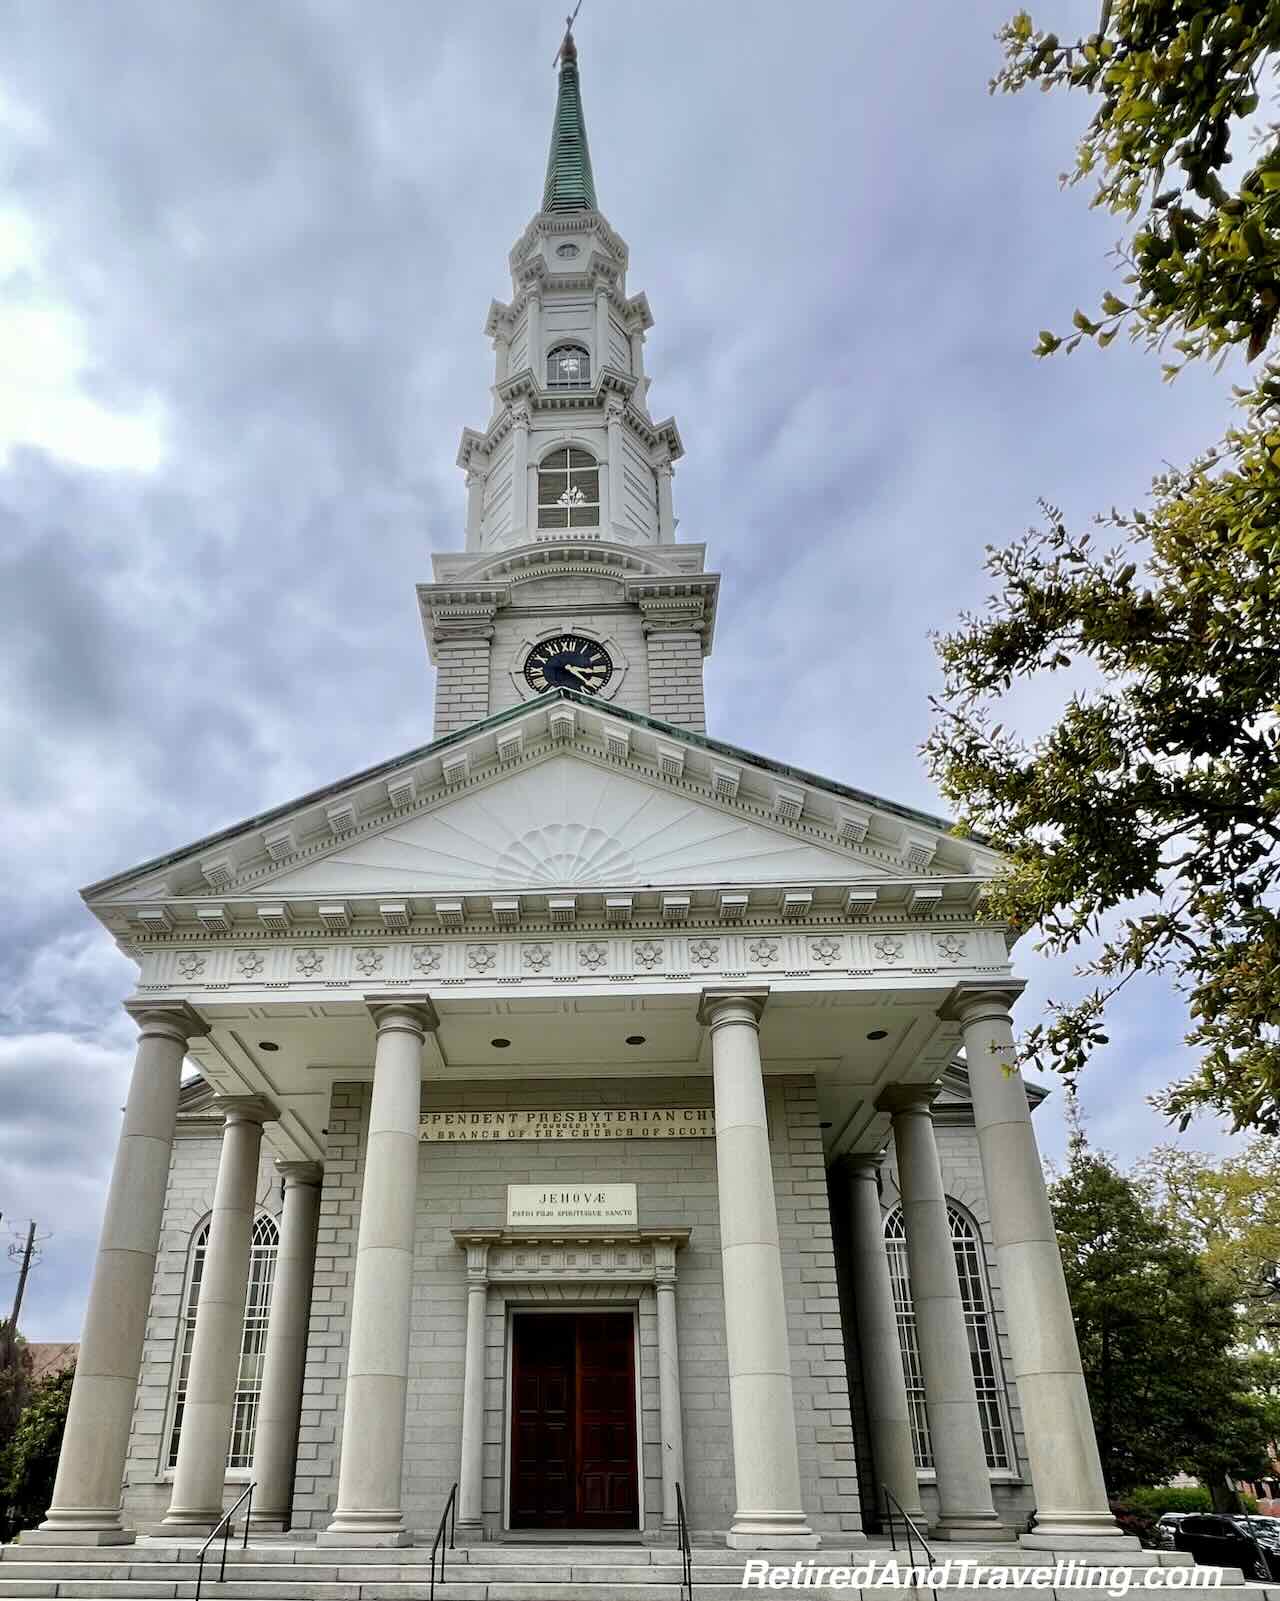 Independent Presbyterian Church - Exploring The Sights In Savannah Georgia